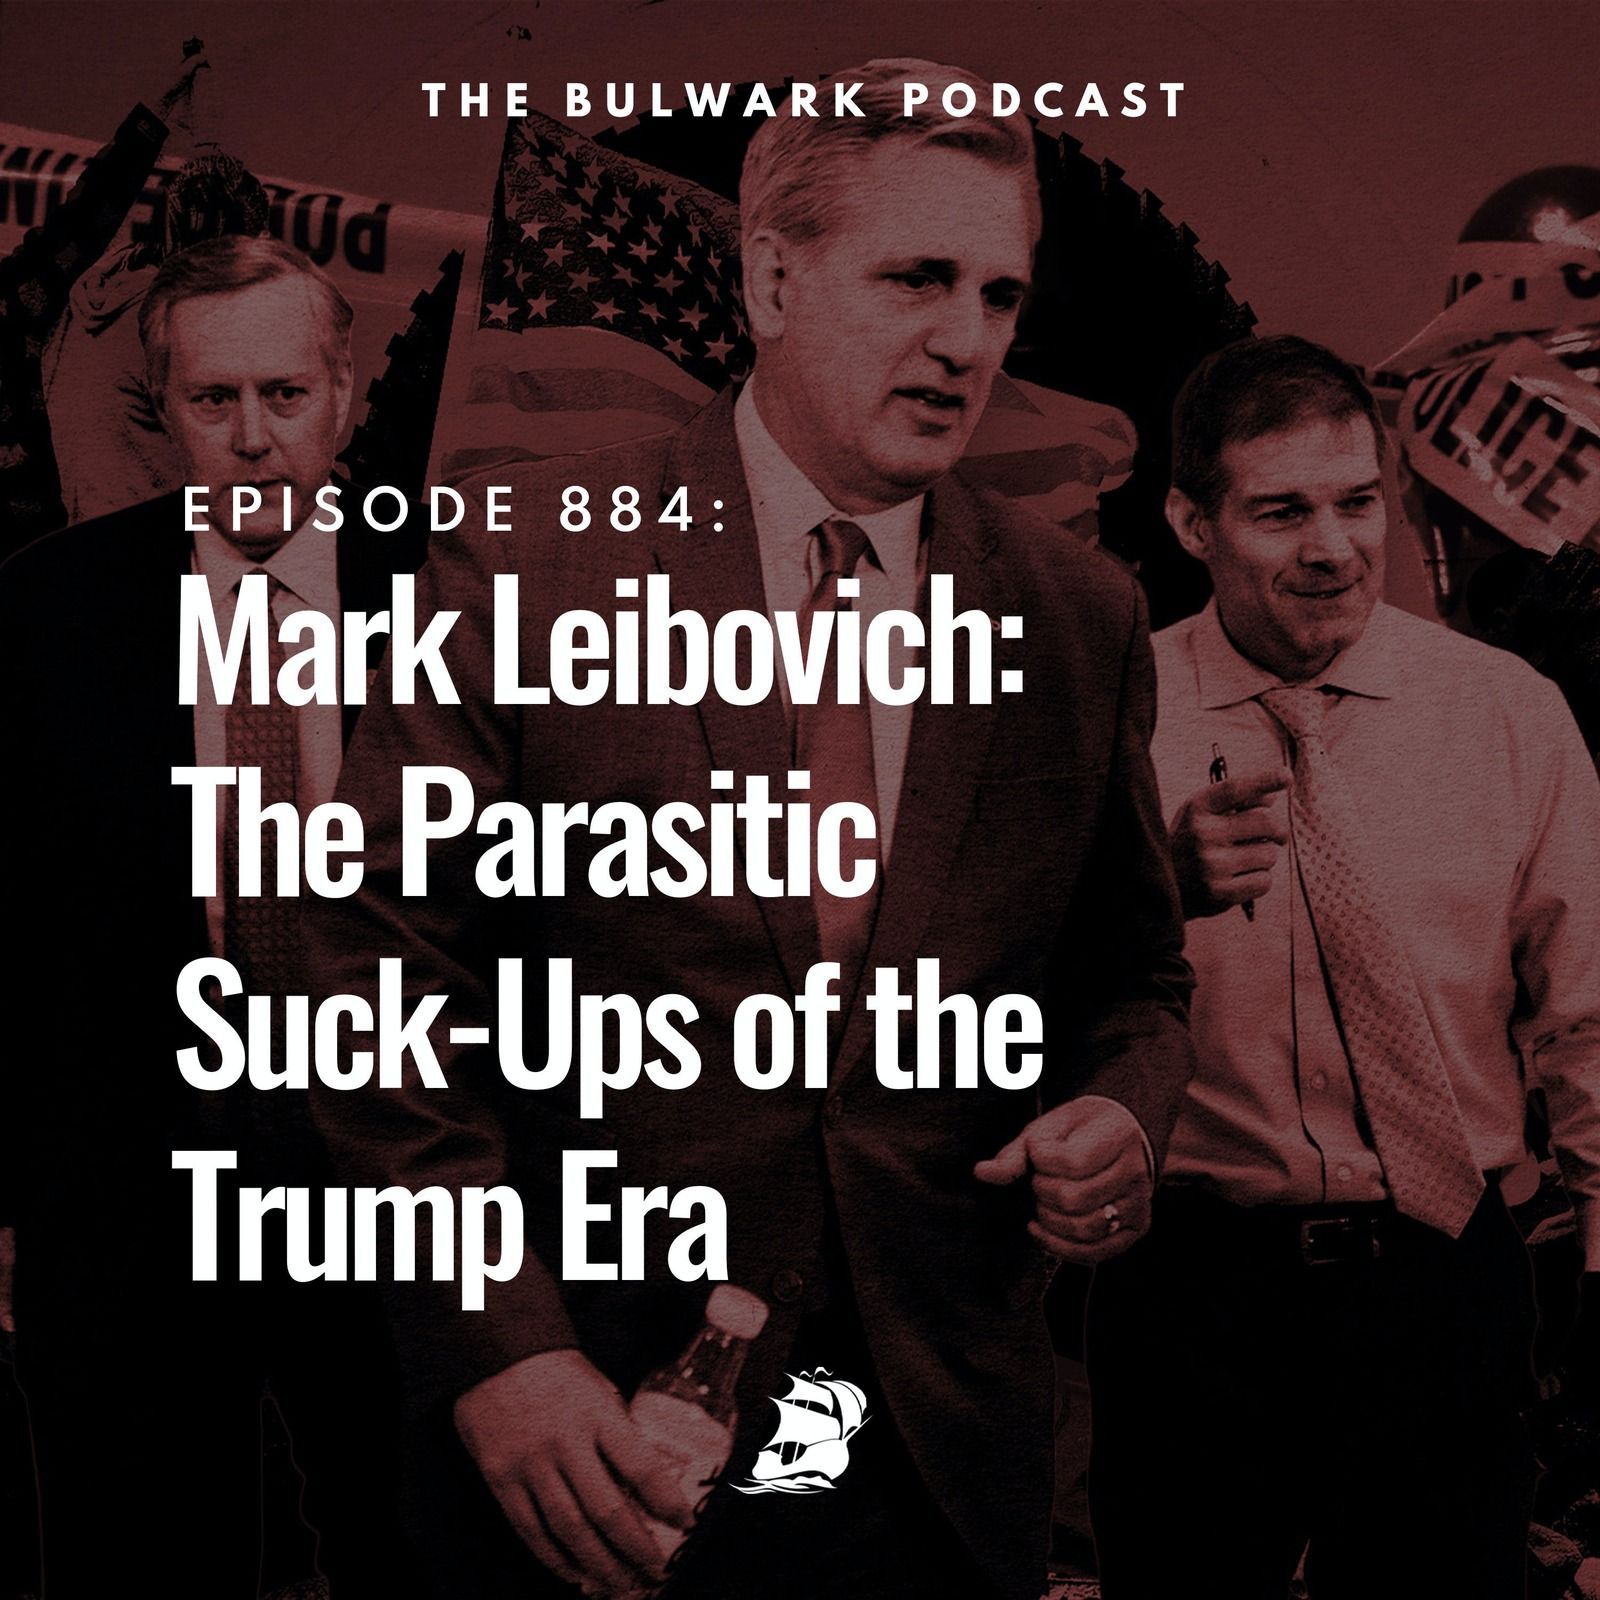 Mark Leibovich: The Parasitic Suck-Ups of the Trump Era